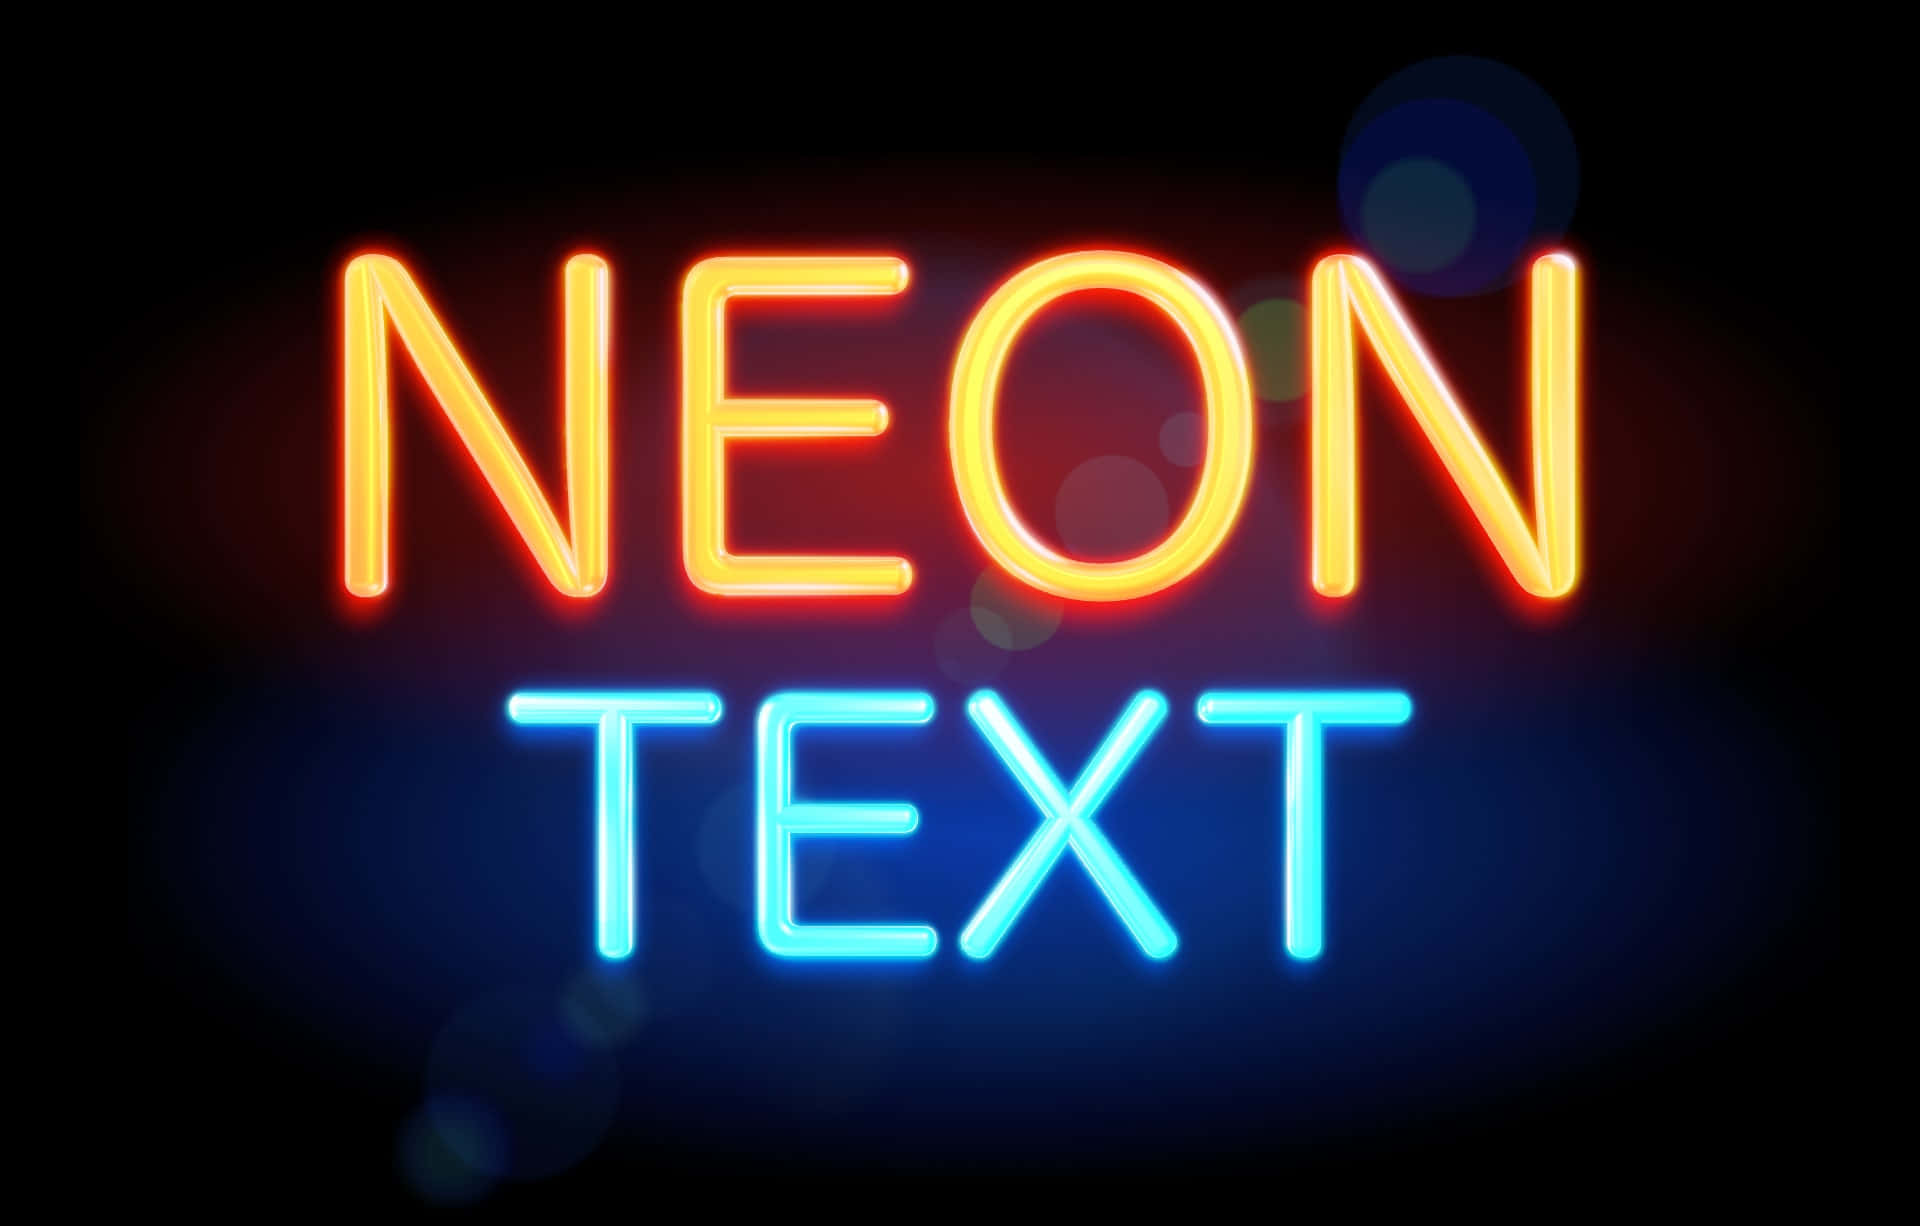 Vibrant Neon Text Display Wallpaper